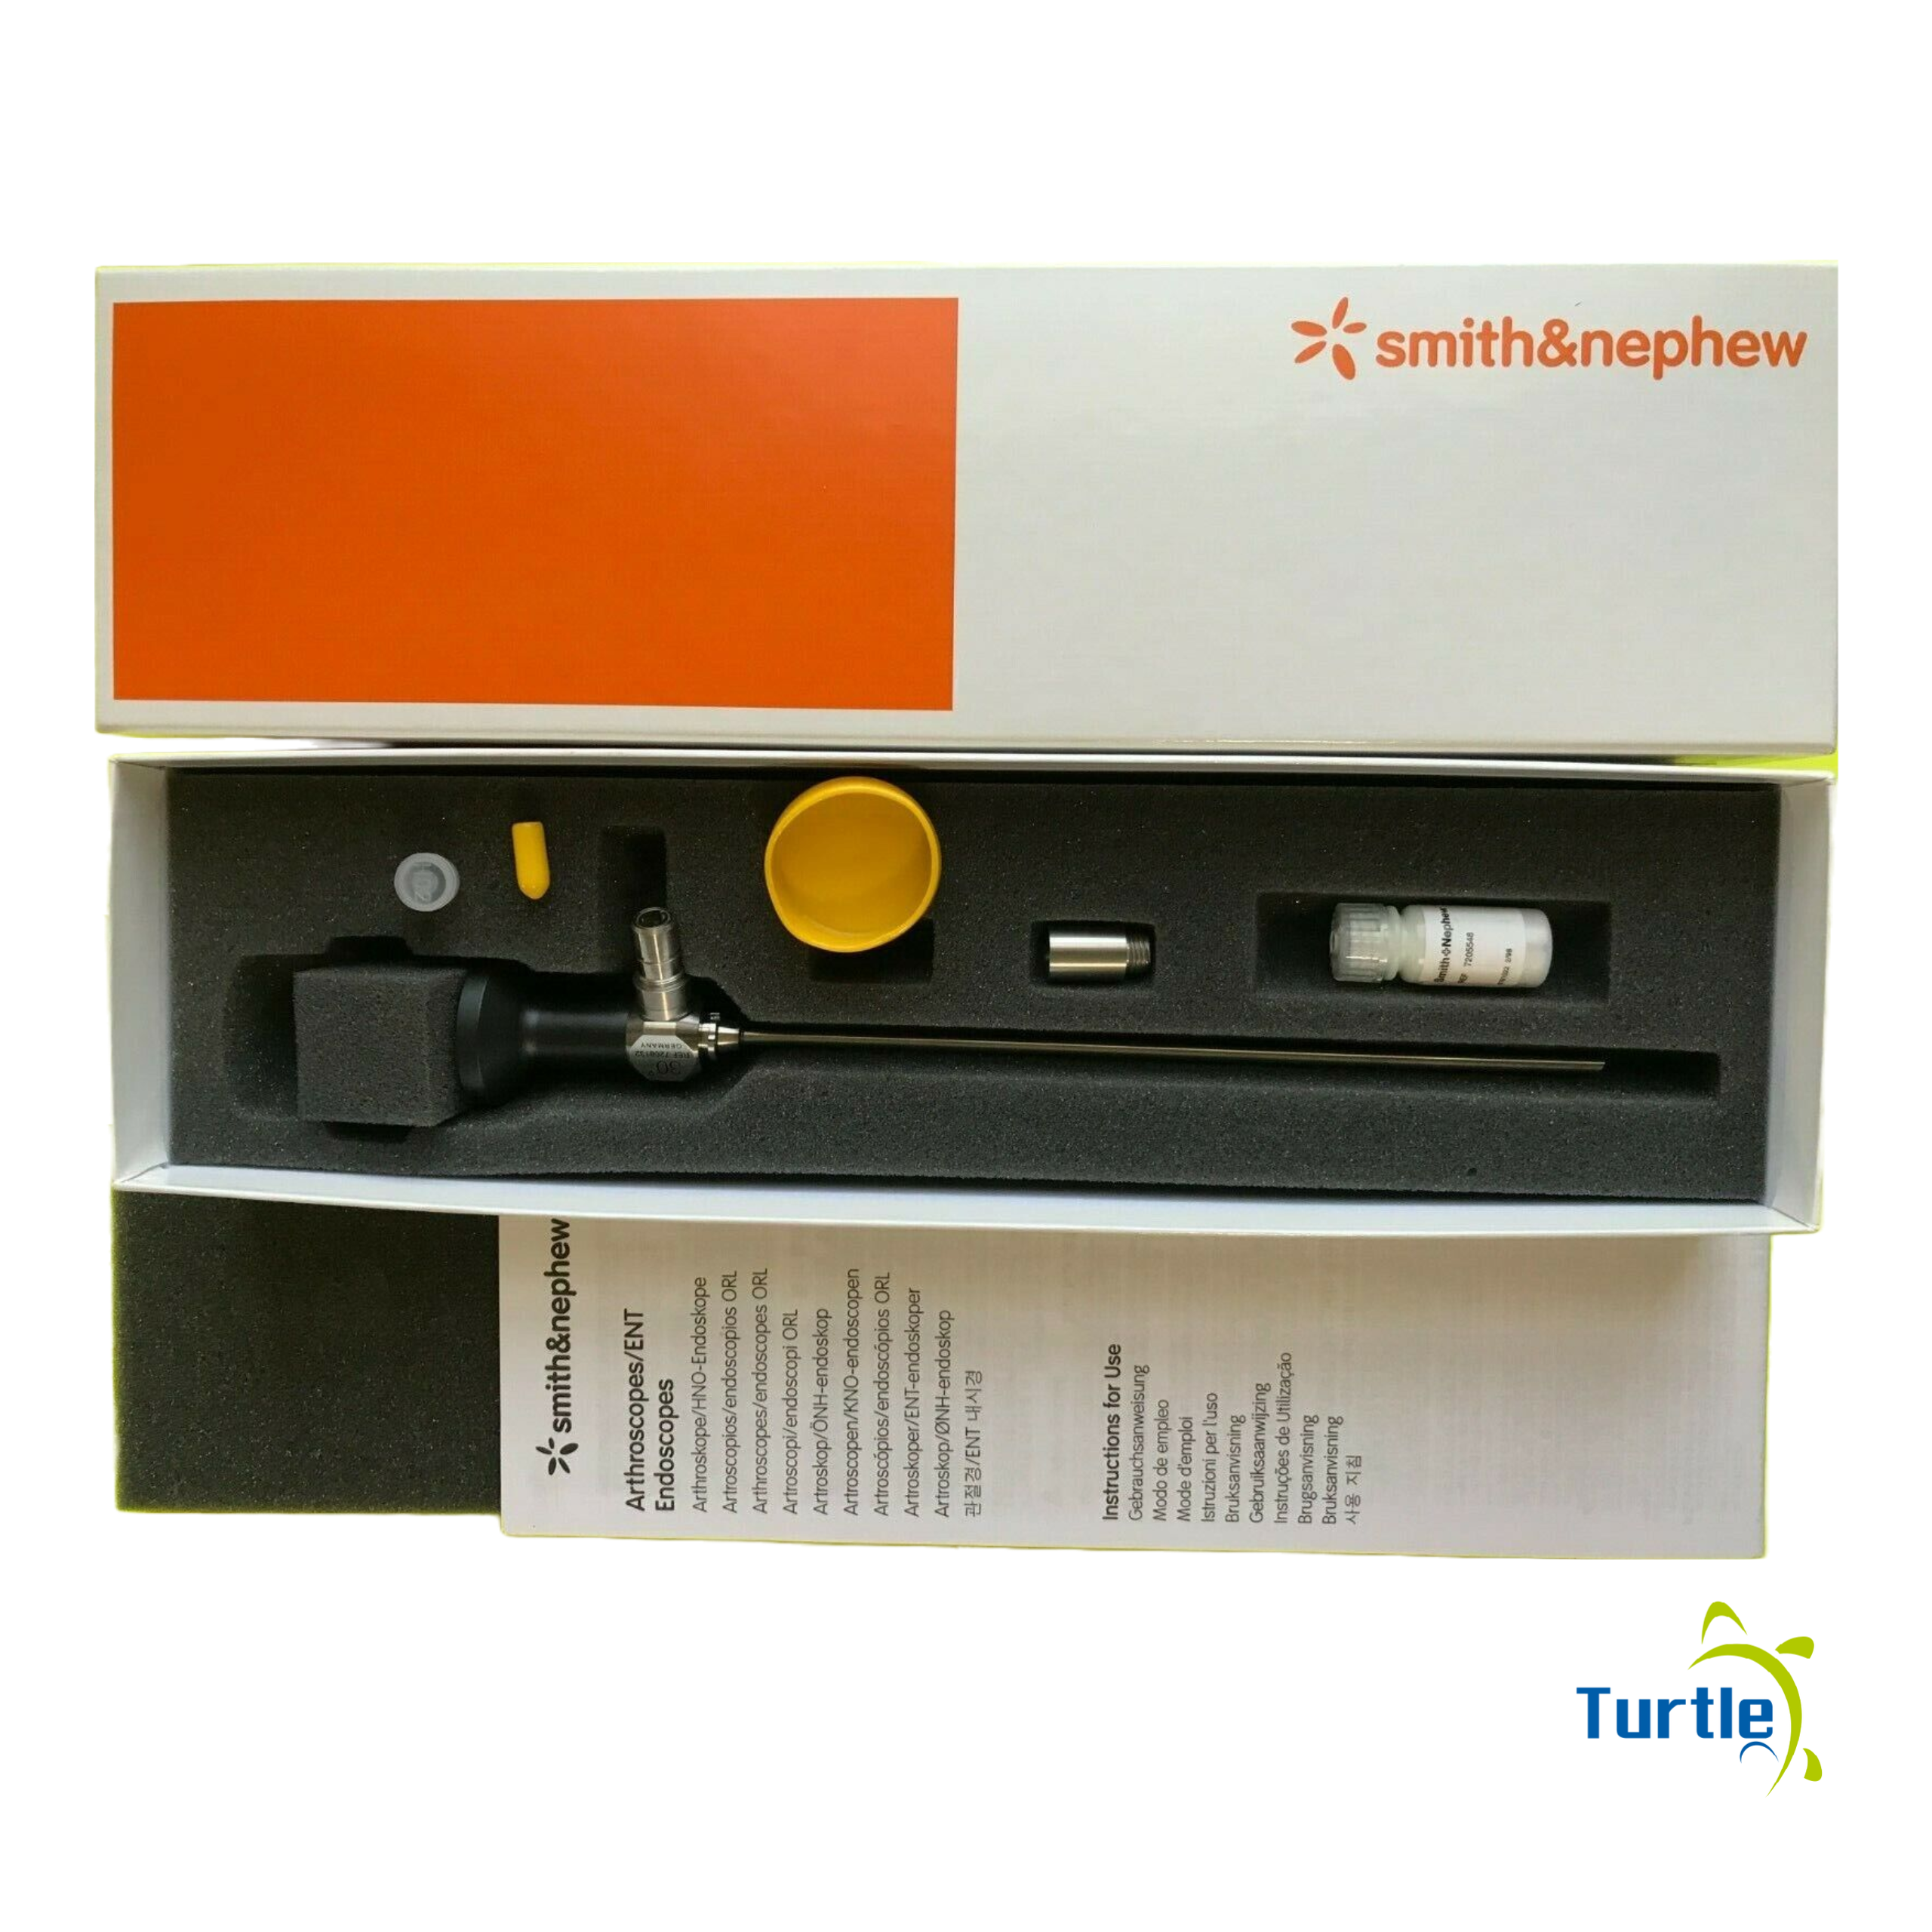 Smith & Nephew Arthroscope 4mm 30° Autoclavable 7208132 STORZ fitting New in Box